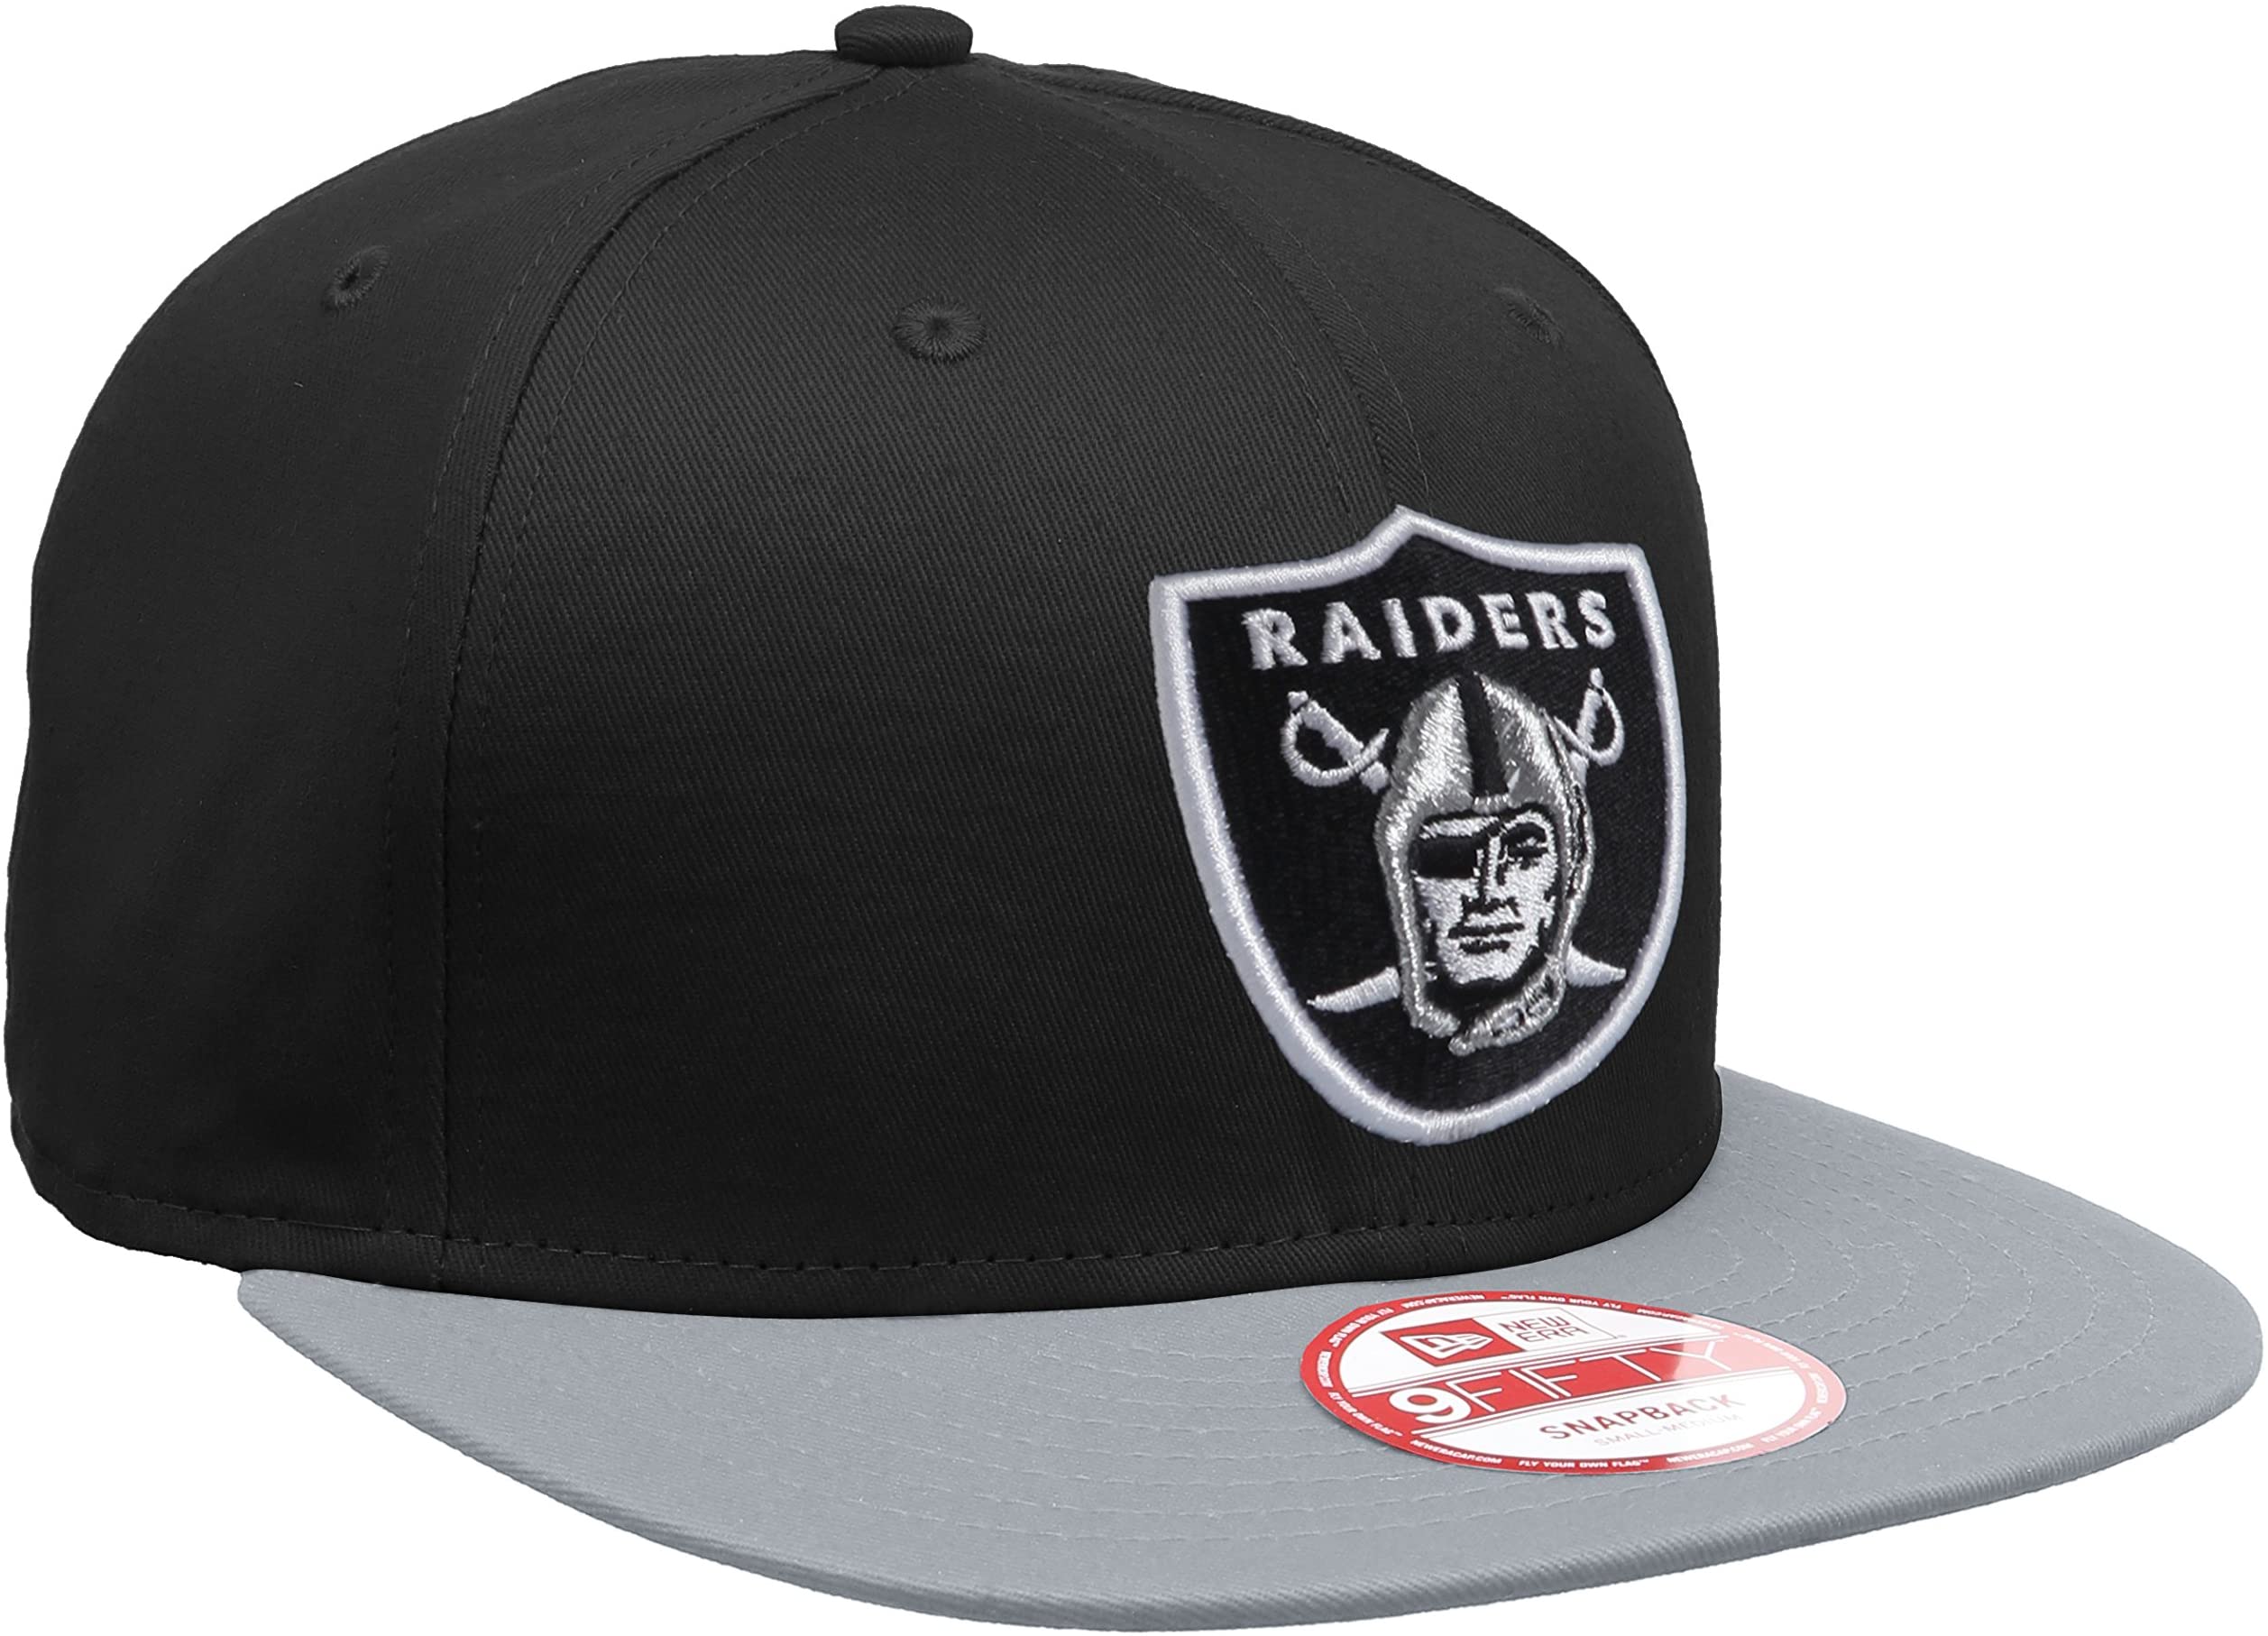 192525301615 black/grey NEW ERA Oakland Raiders sideline away 9fifty snapback cap 